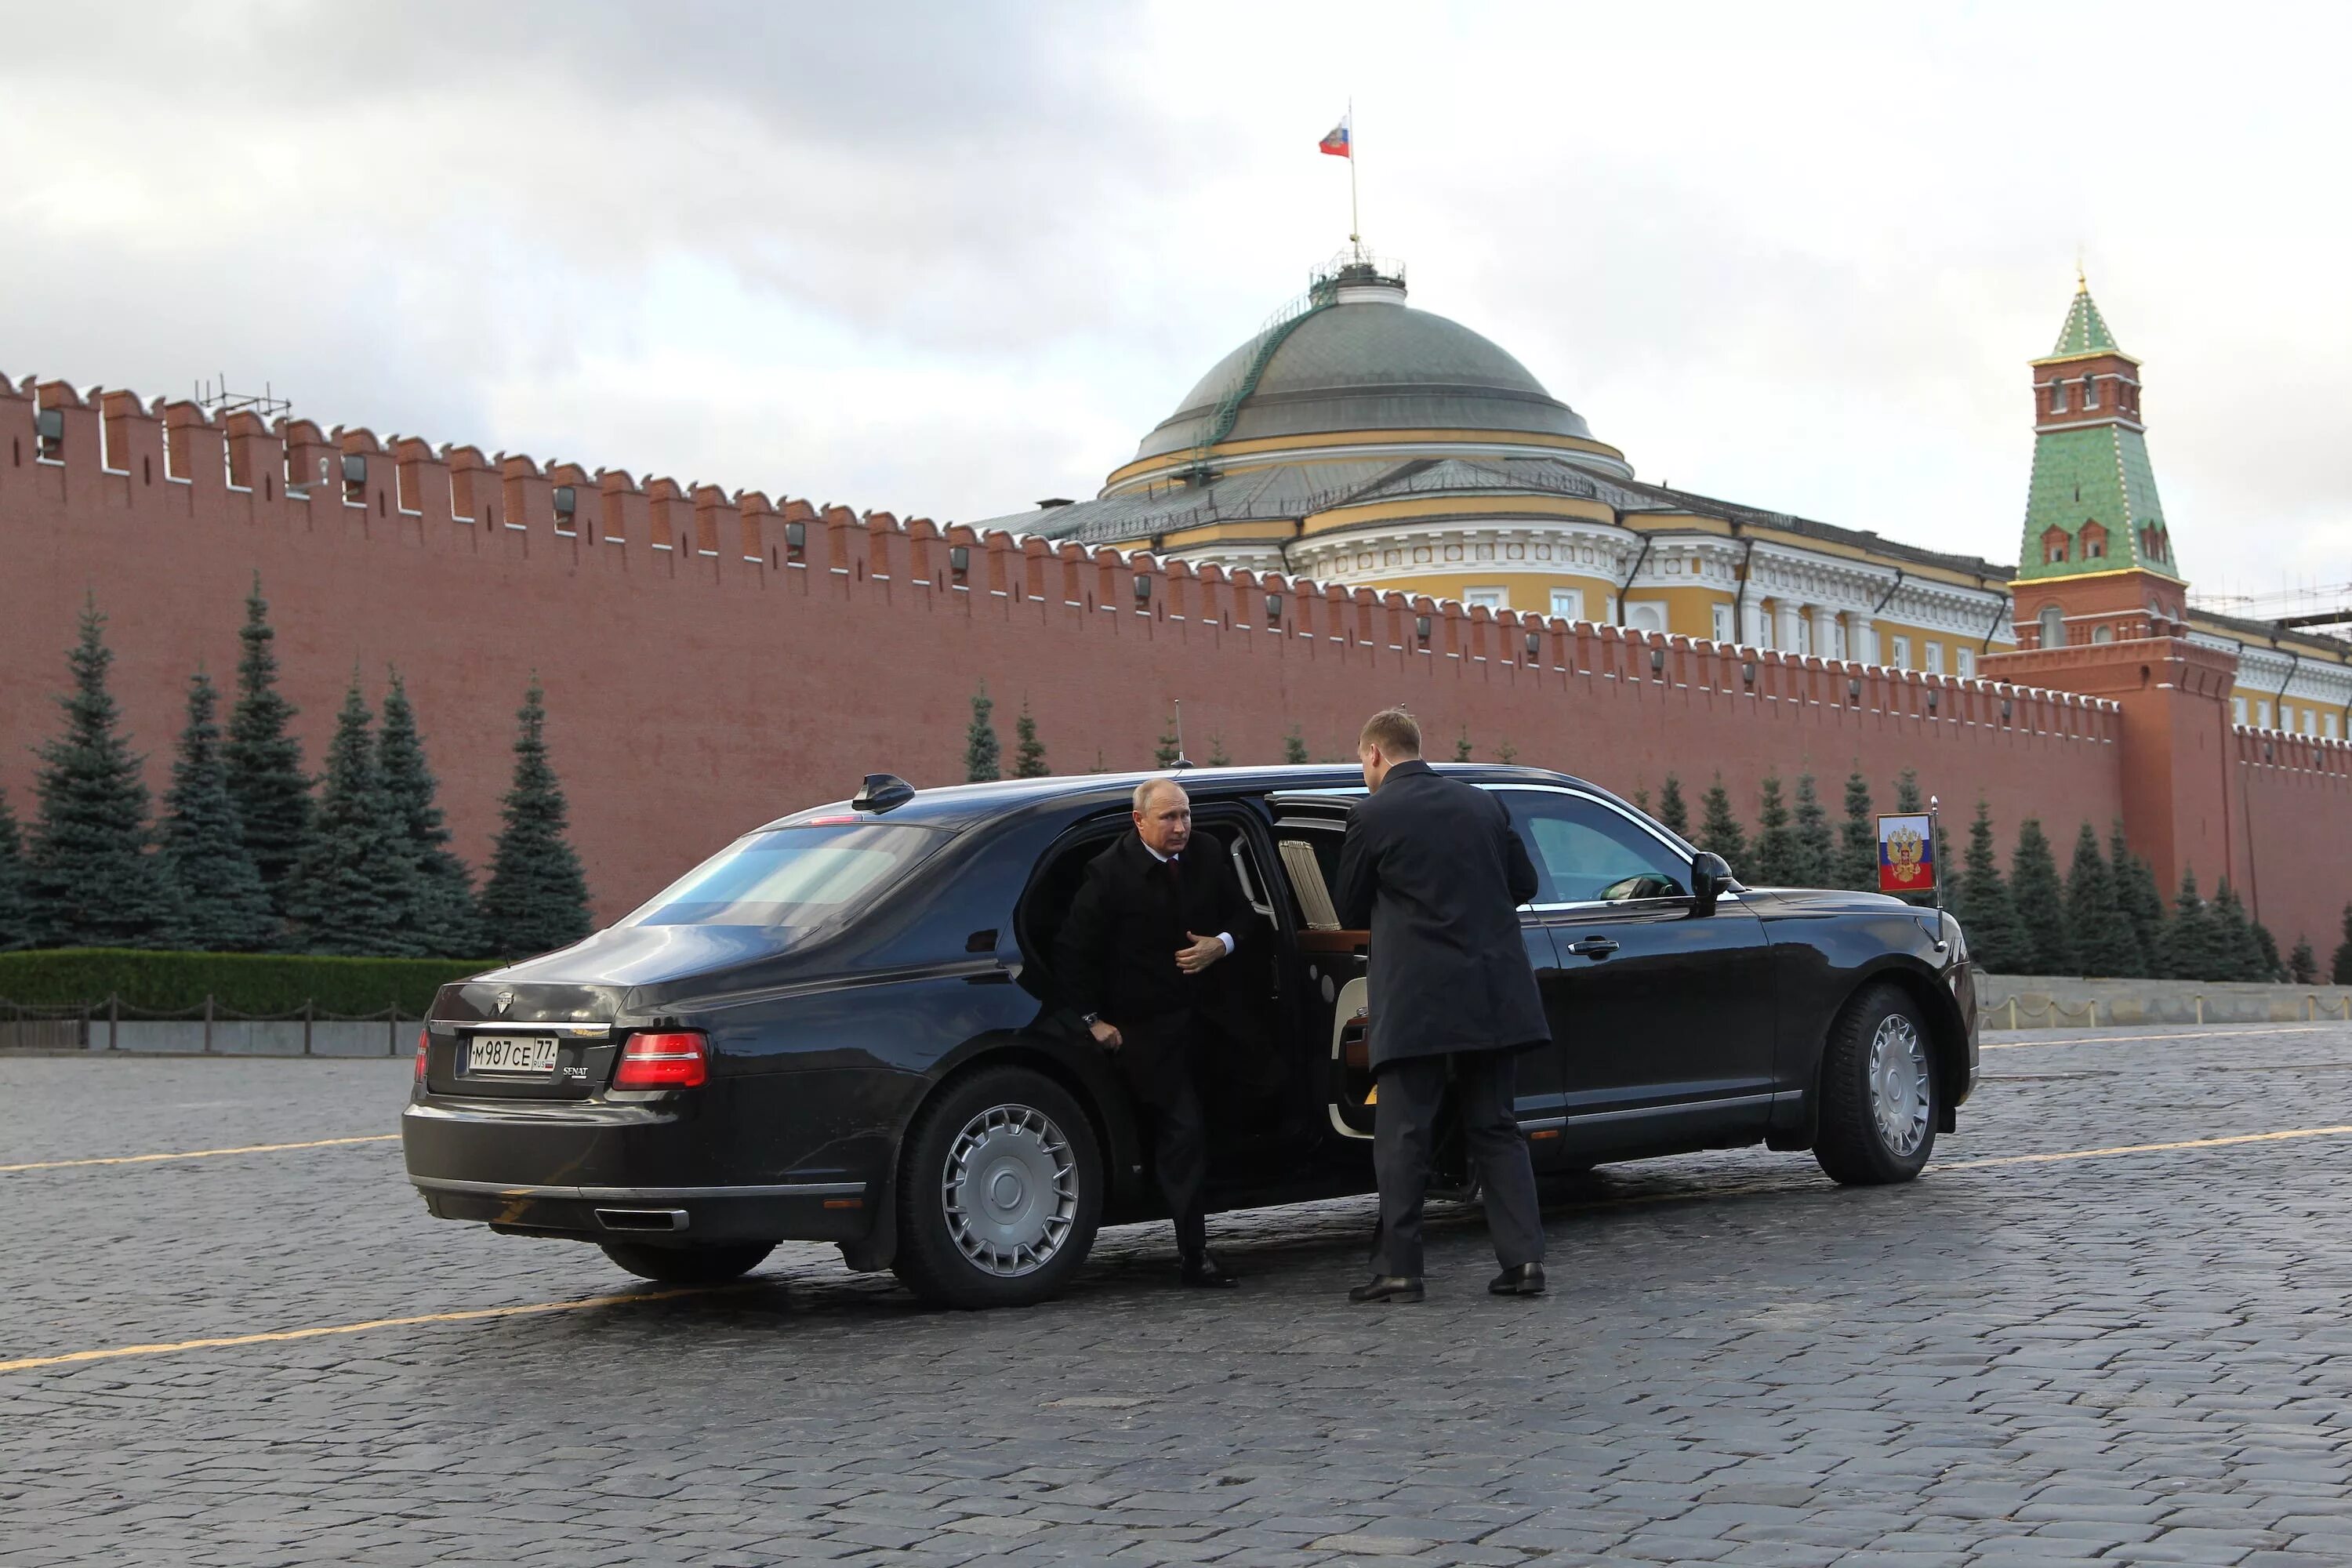 Аурус кортеж президента. Машина Путина Аурус. Аурус автомобиль ФСО.